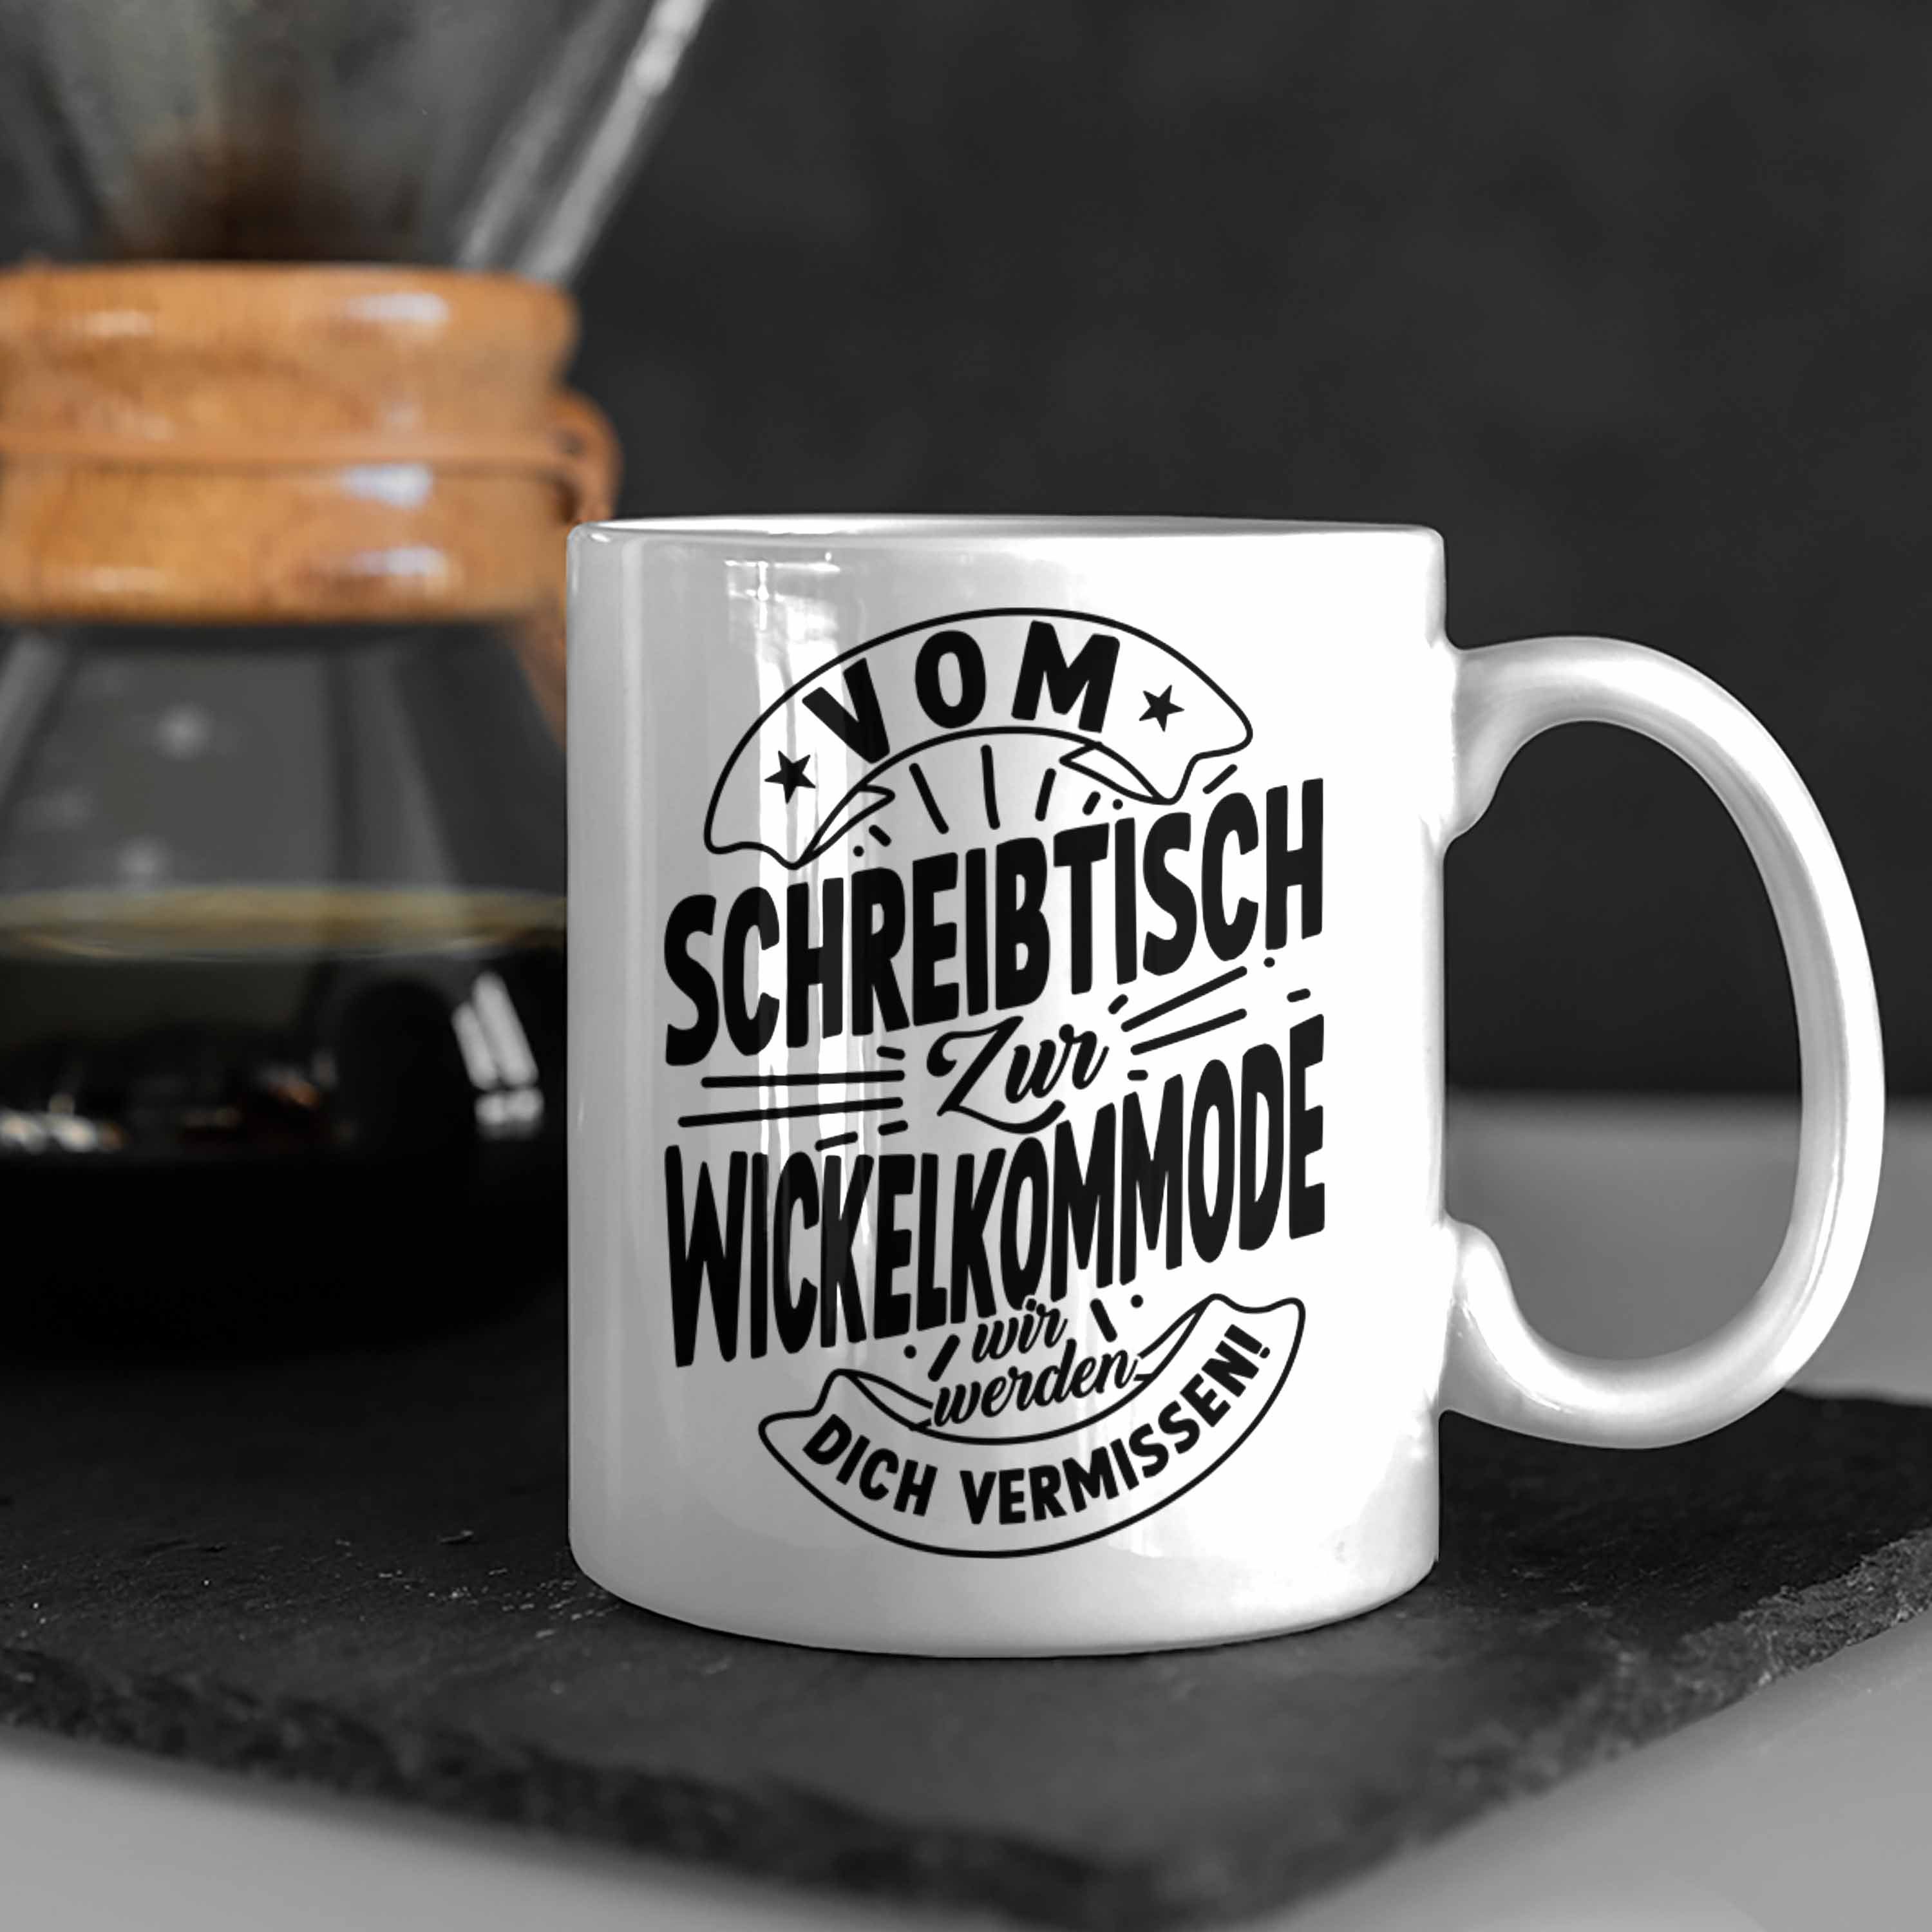 Trendation Kollegi Abschied Weiss Mutterschutz Tasse Mutterschutz Tasse Kaffeetasse Geschenk